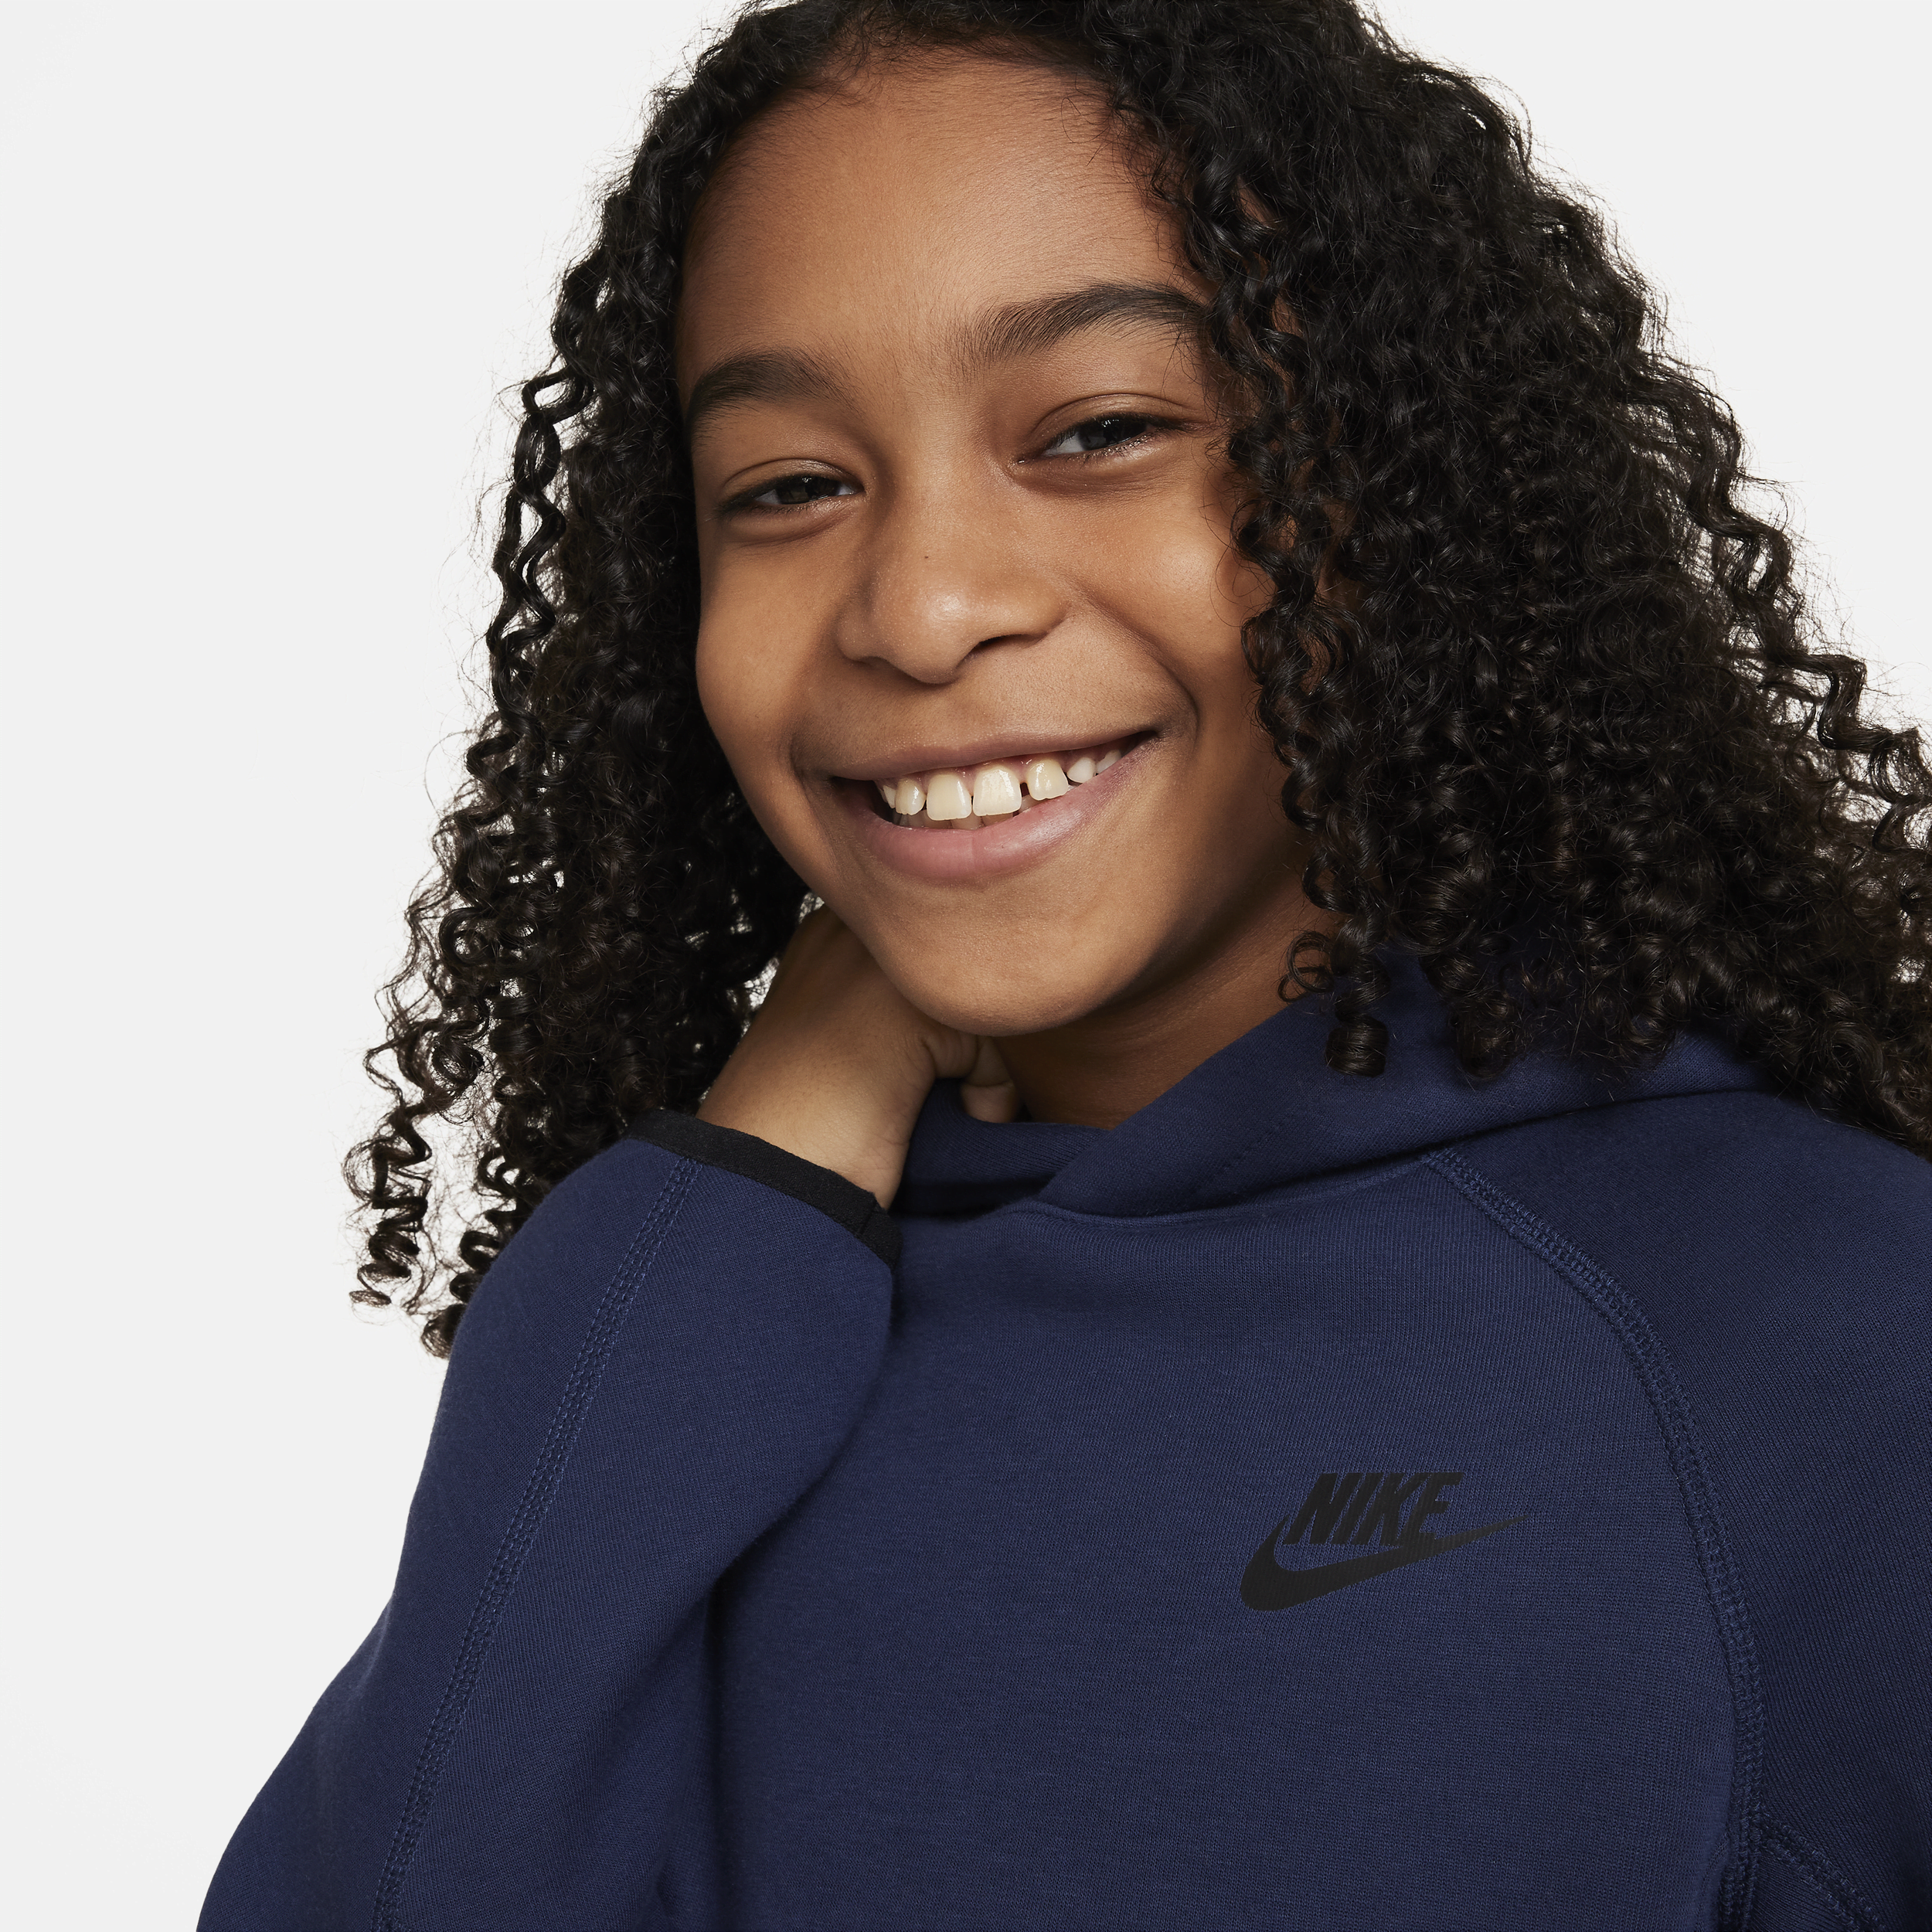 Nike Sportswear Tech Fleece hoodie voor jongens Blauw